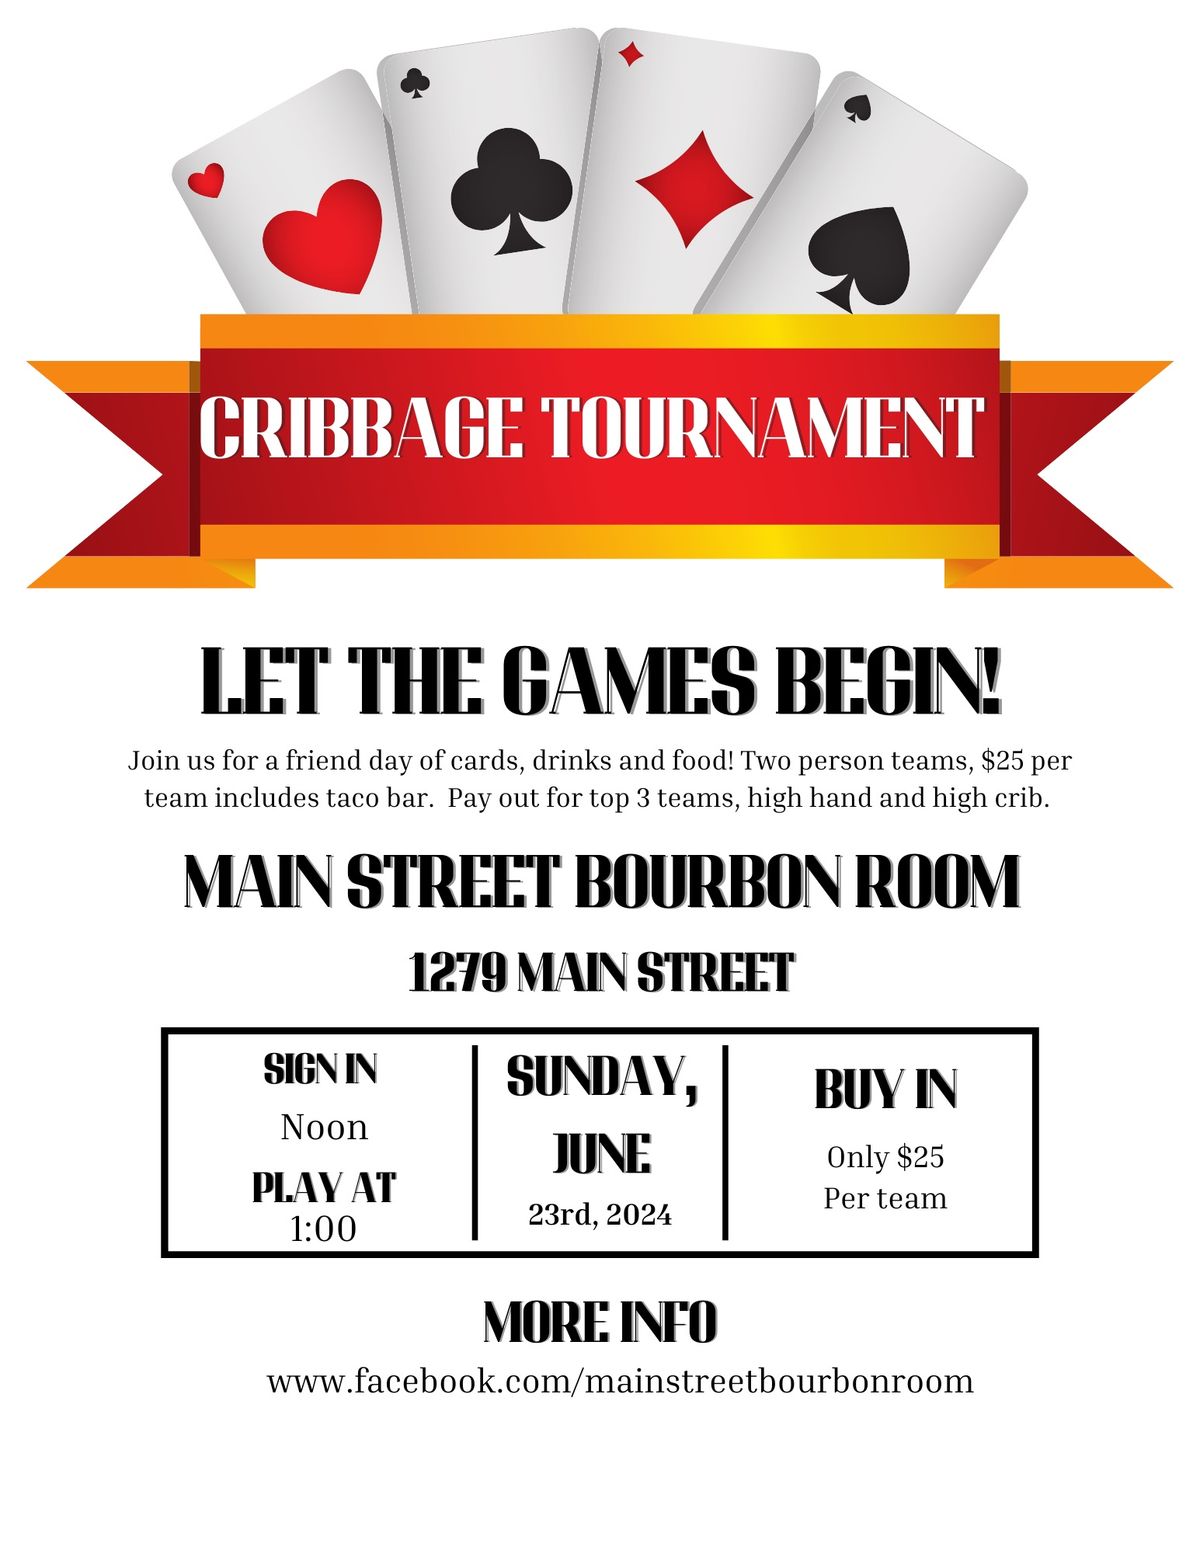 MSBR Cribbage Tournament 